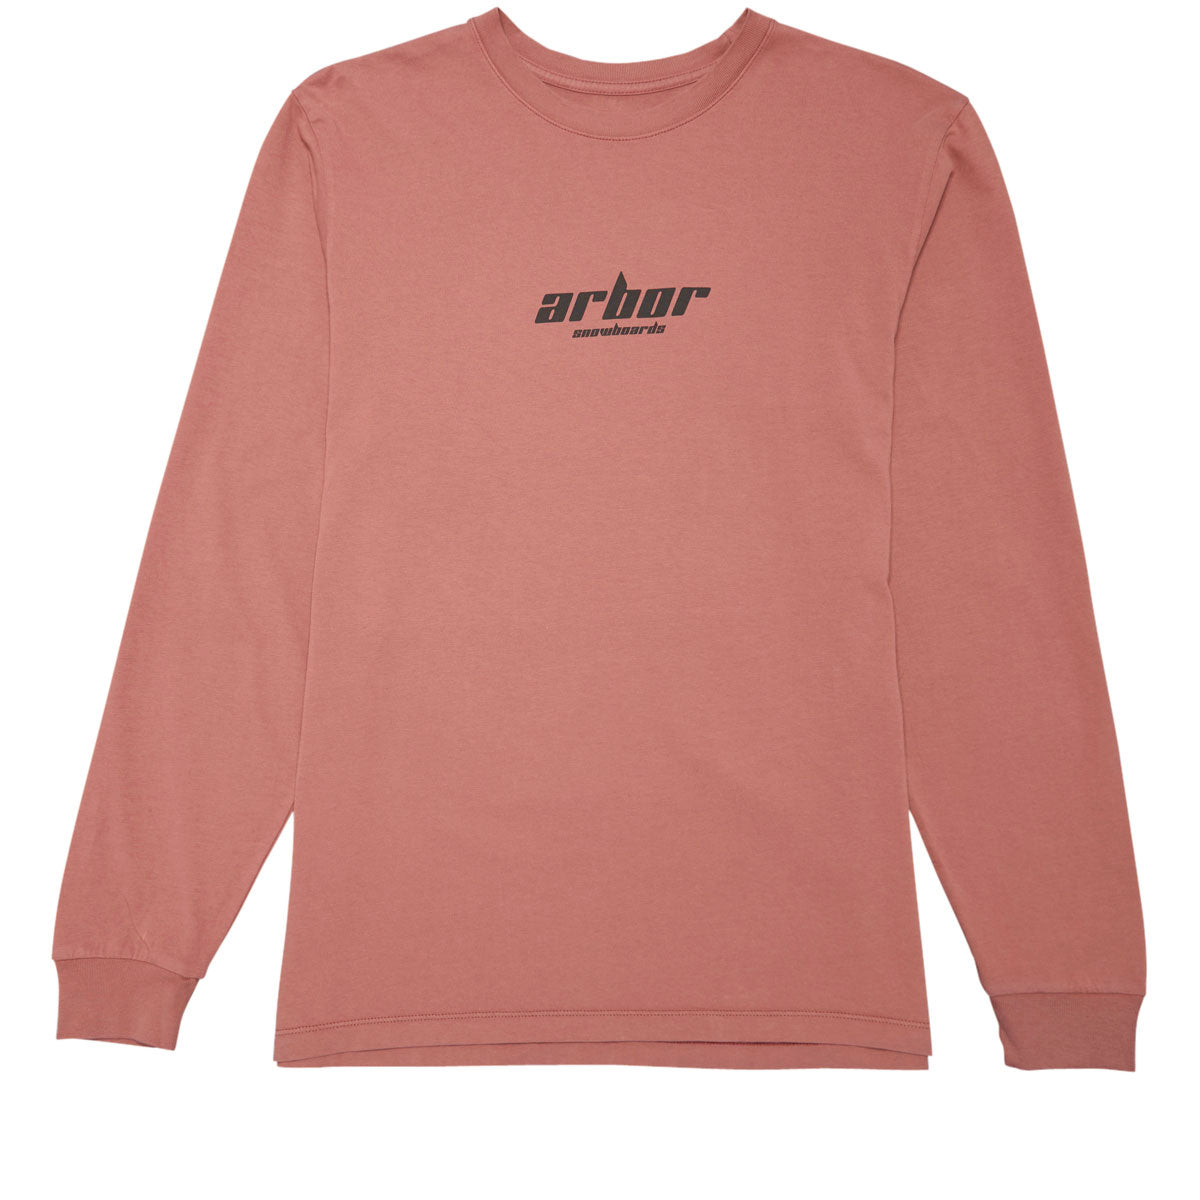 Arbor Draft Long Sleeve T-Shirt - Plum image 1